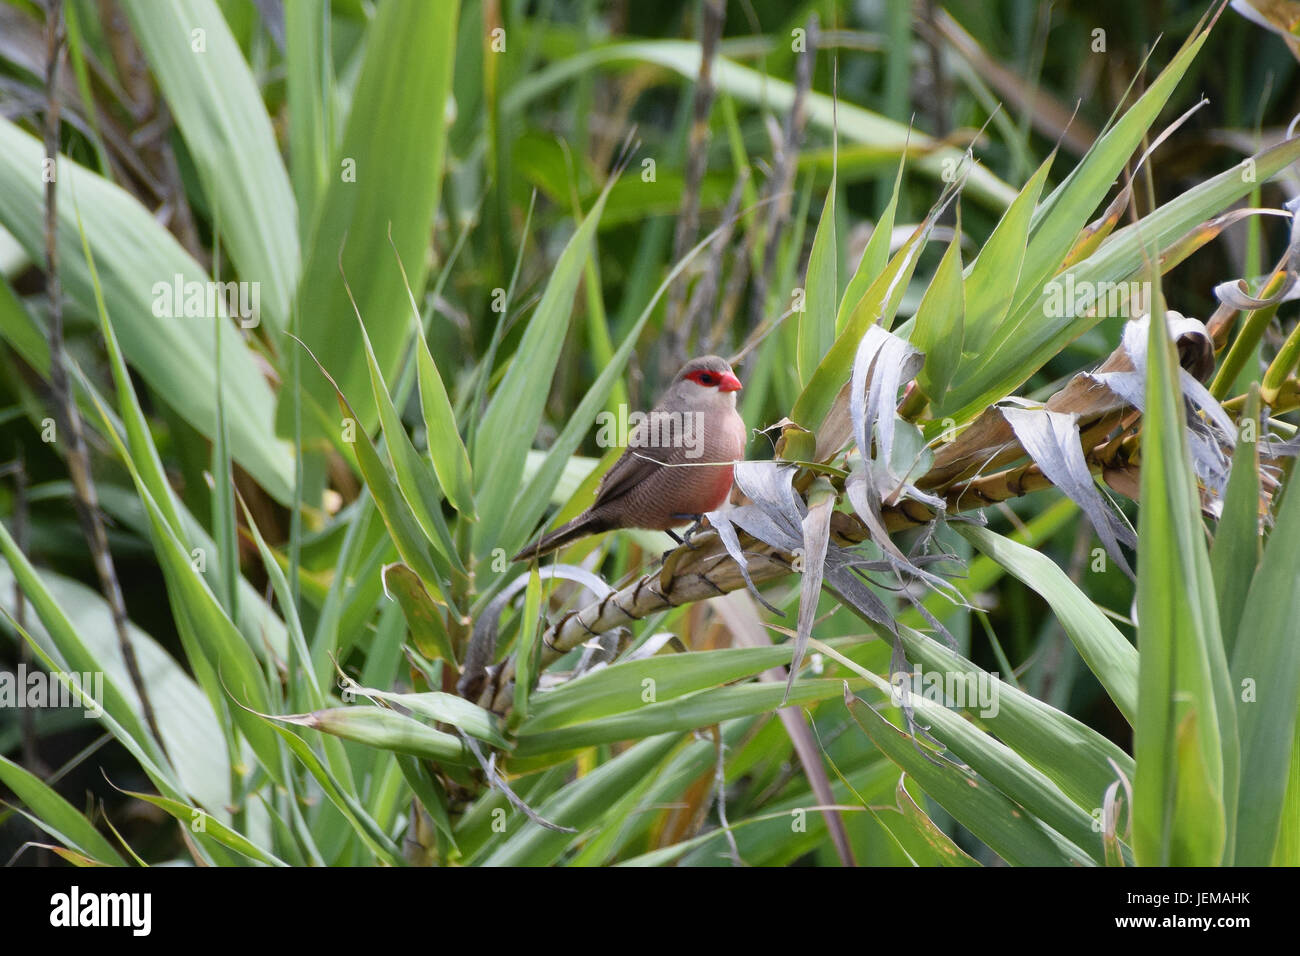 Common Waxbill wild bird perched on green vegetation Stock Photo